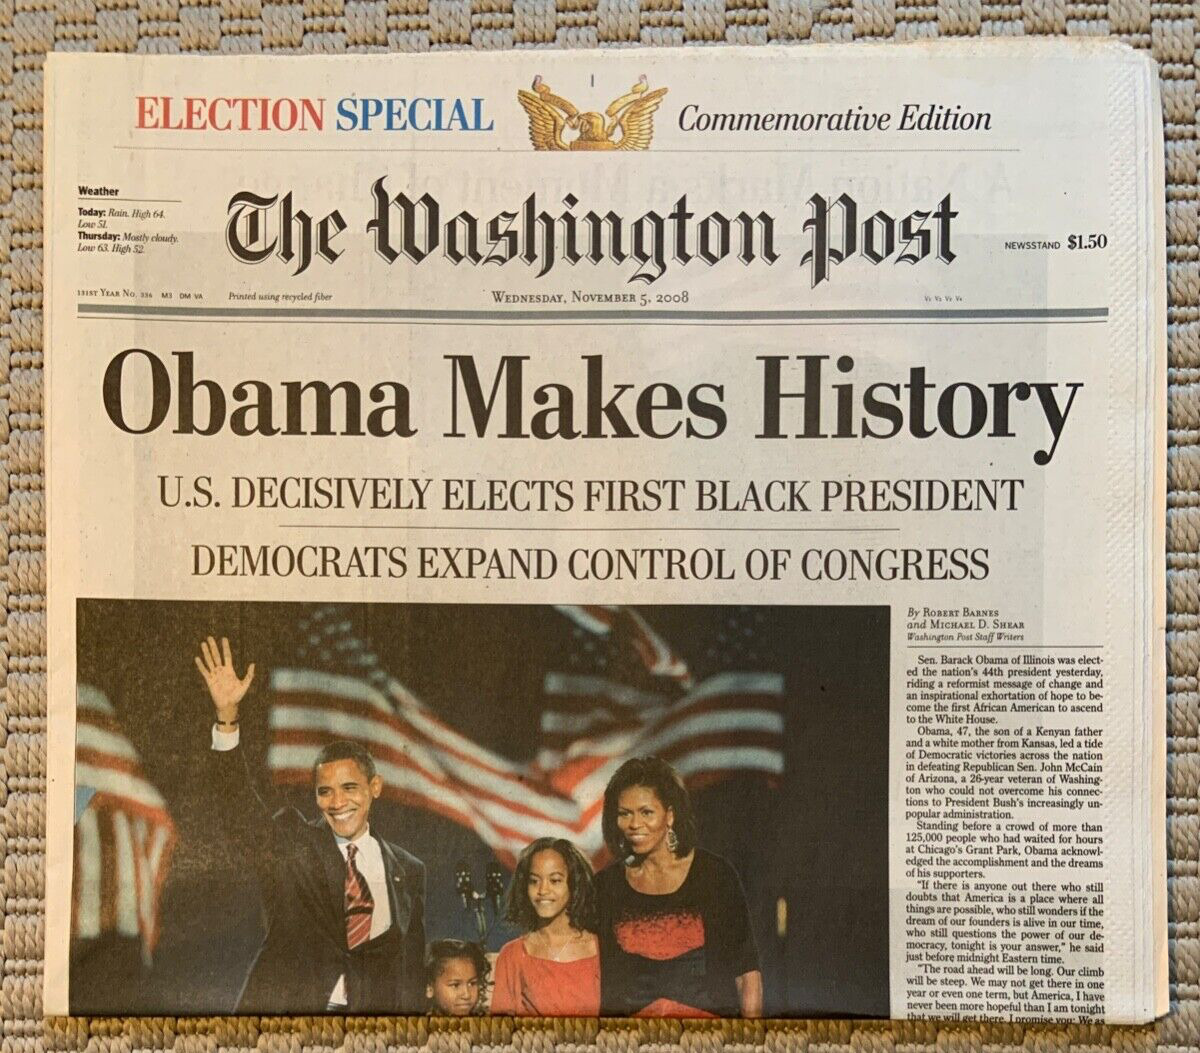 The Washington Post November 5 2008 Commemorative Edition “Obama Makes History” 